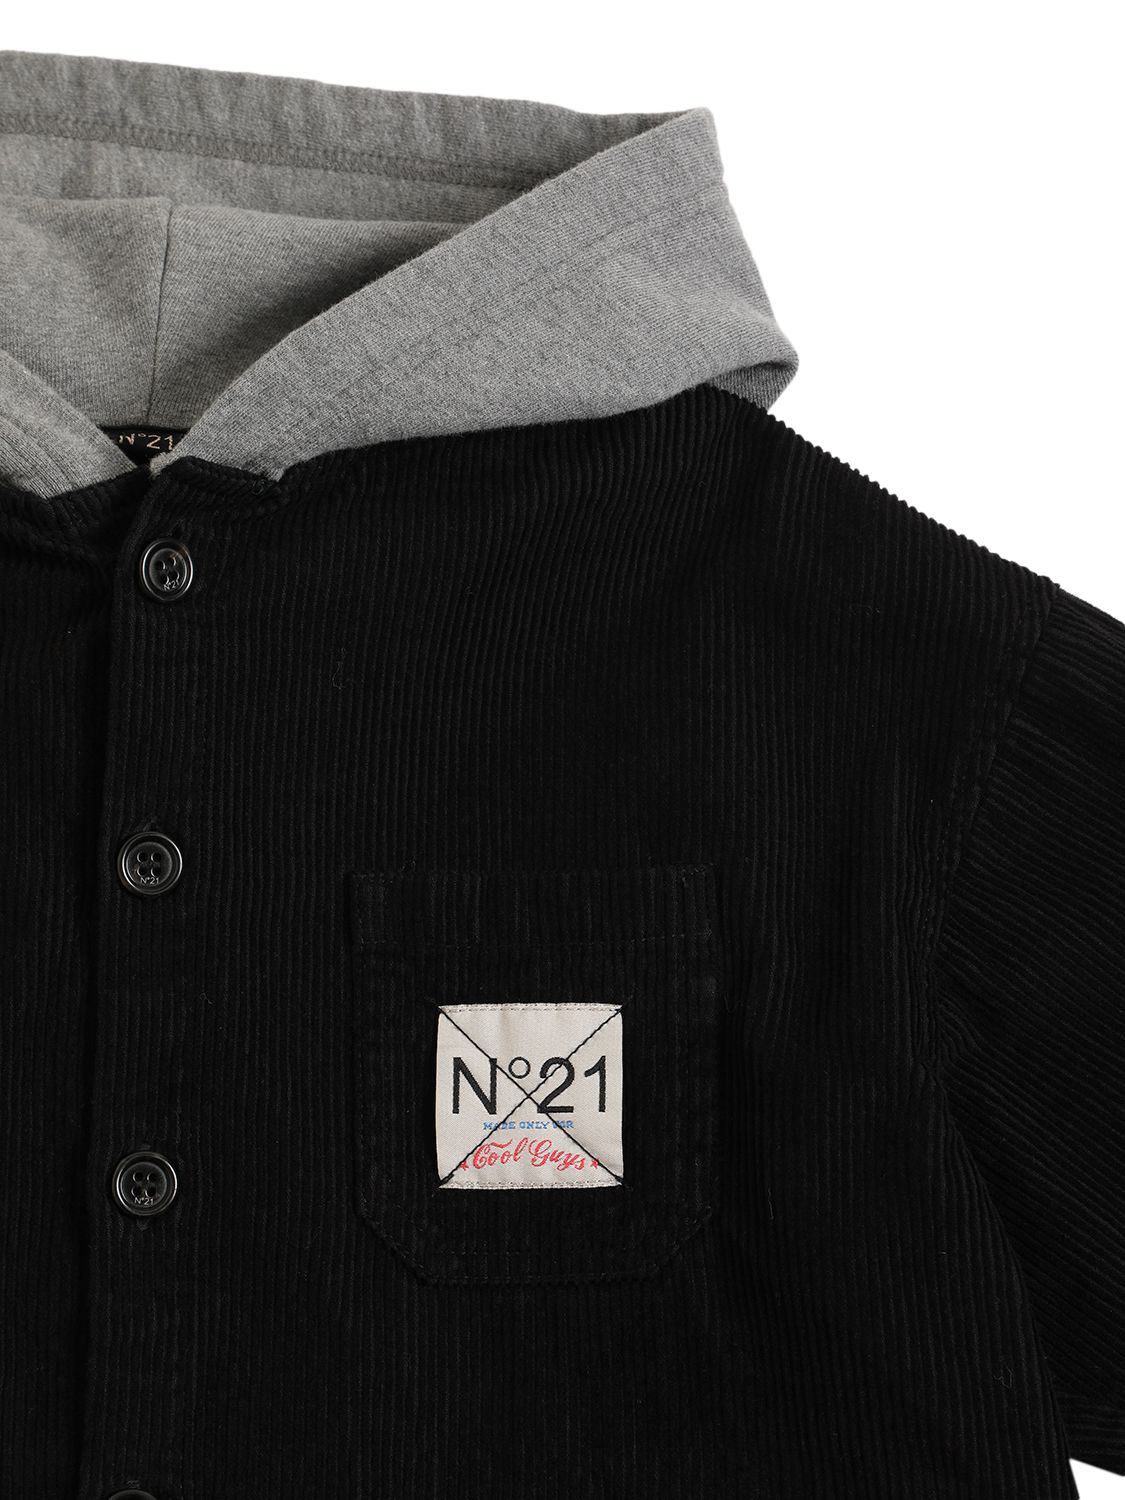 Shop N°21 Cotton Corduroy Shirt W/ Hood In Black,grey